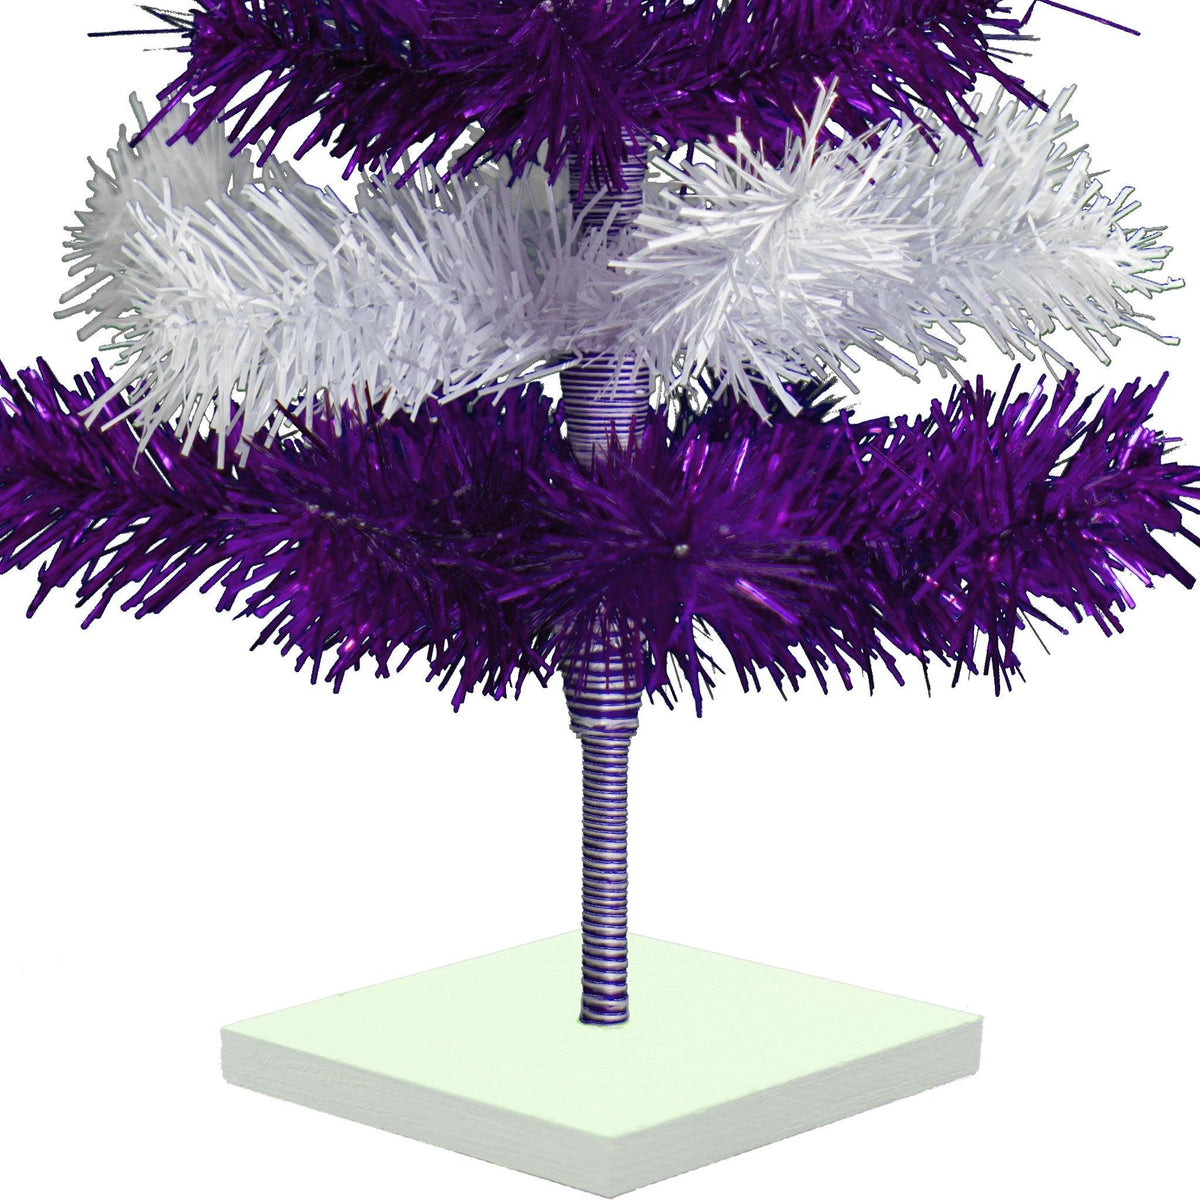 18in Purple & White Layered Tinsel Christmas Trees on sale at leedisplay.com